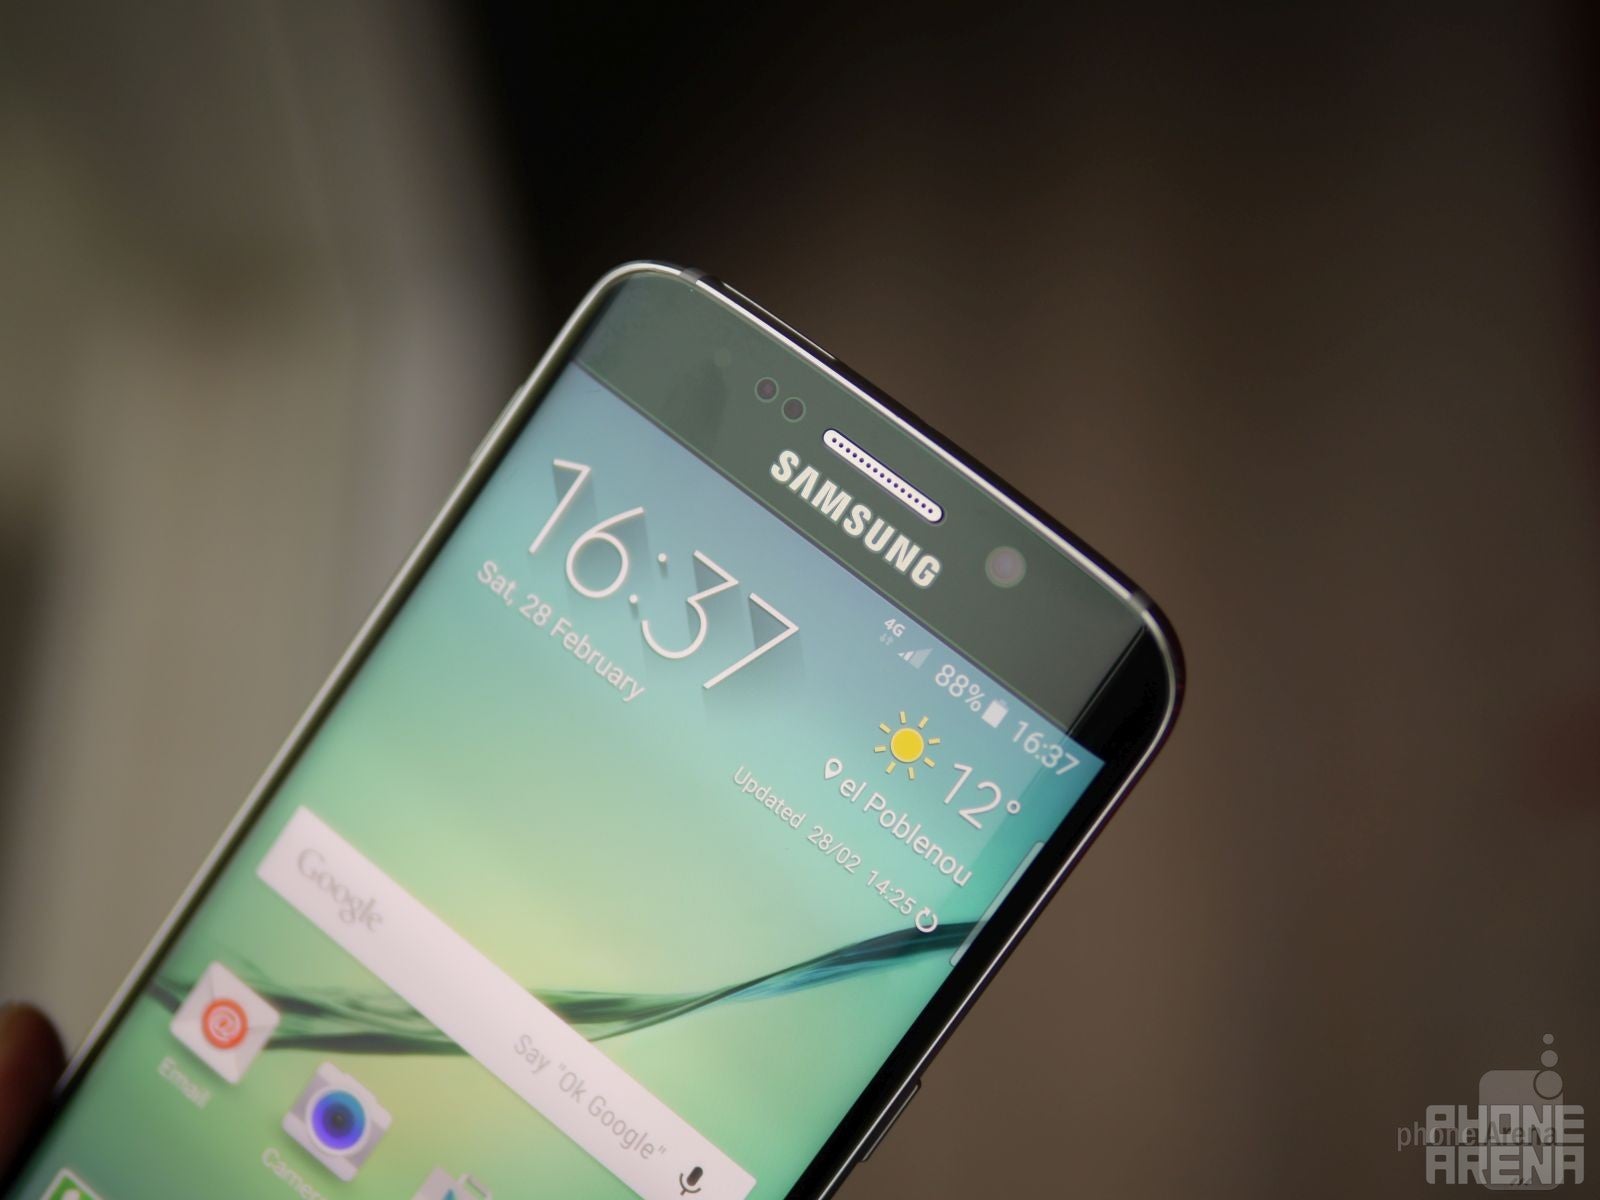 Samsung Galaxy S6 edge hands-on